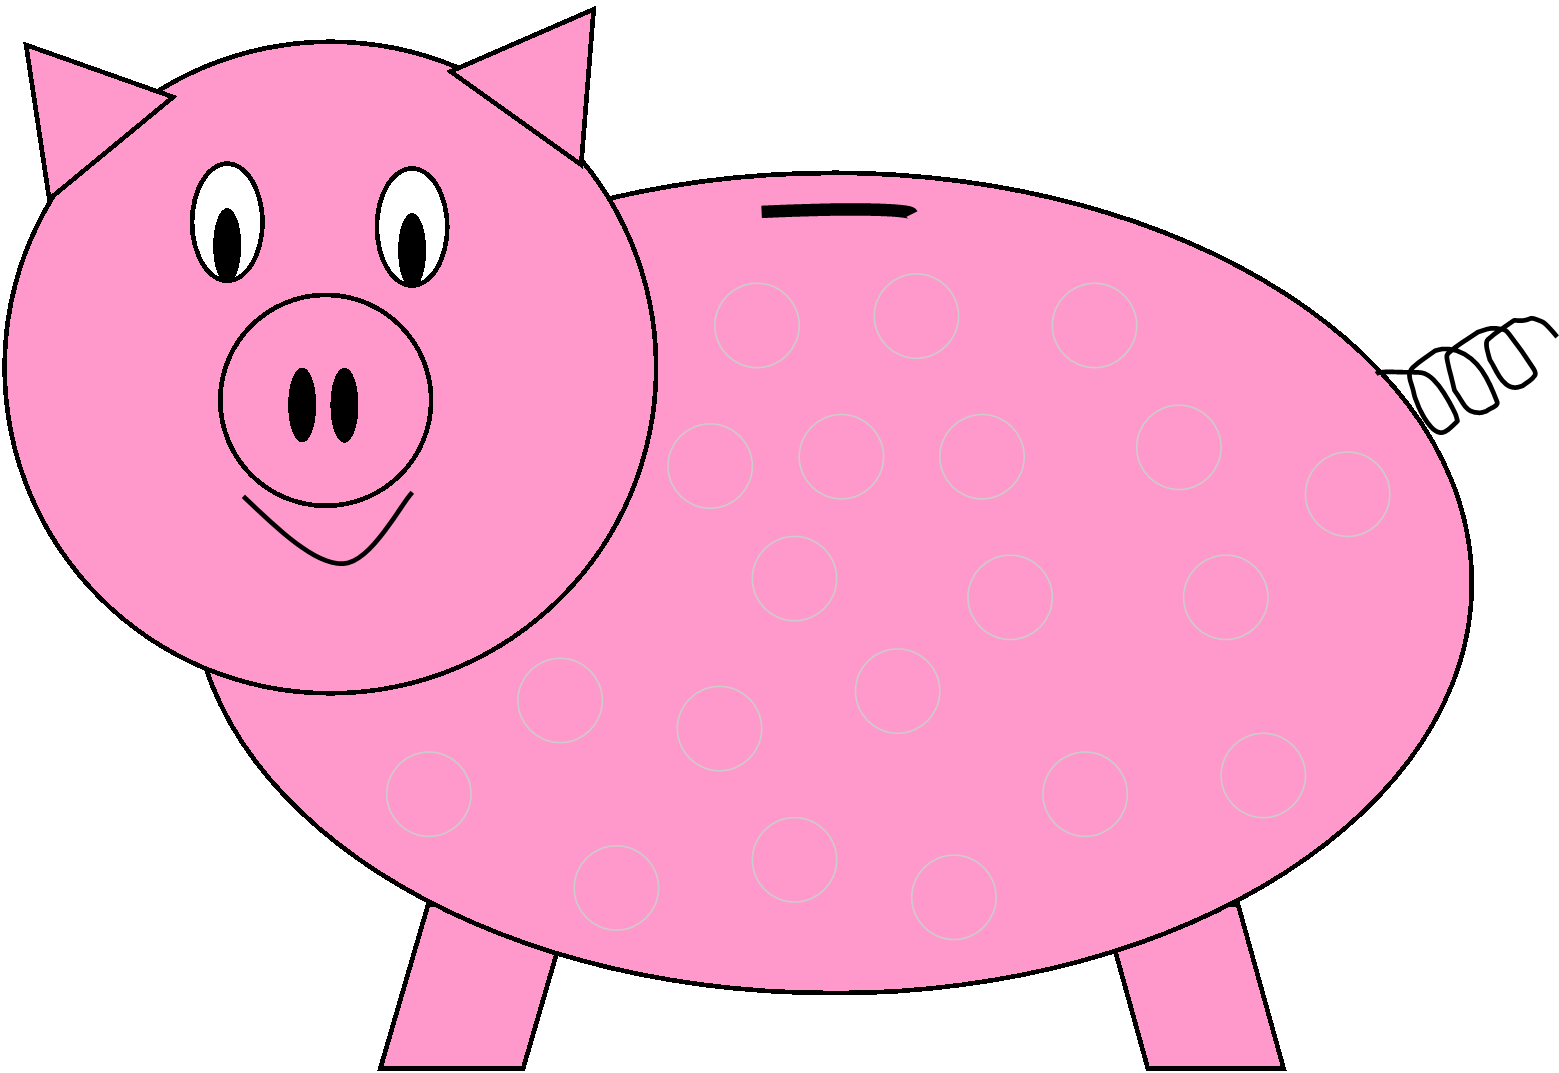 ... Piggy Bank - A cartoon il